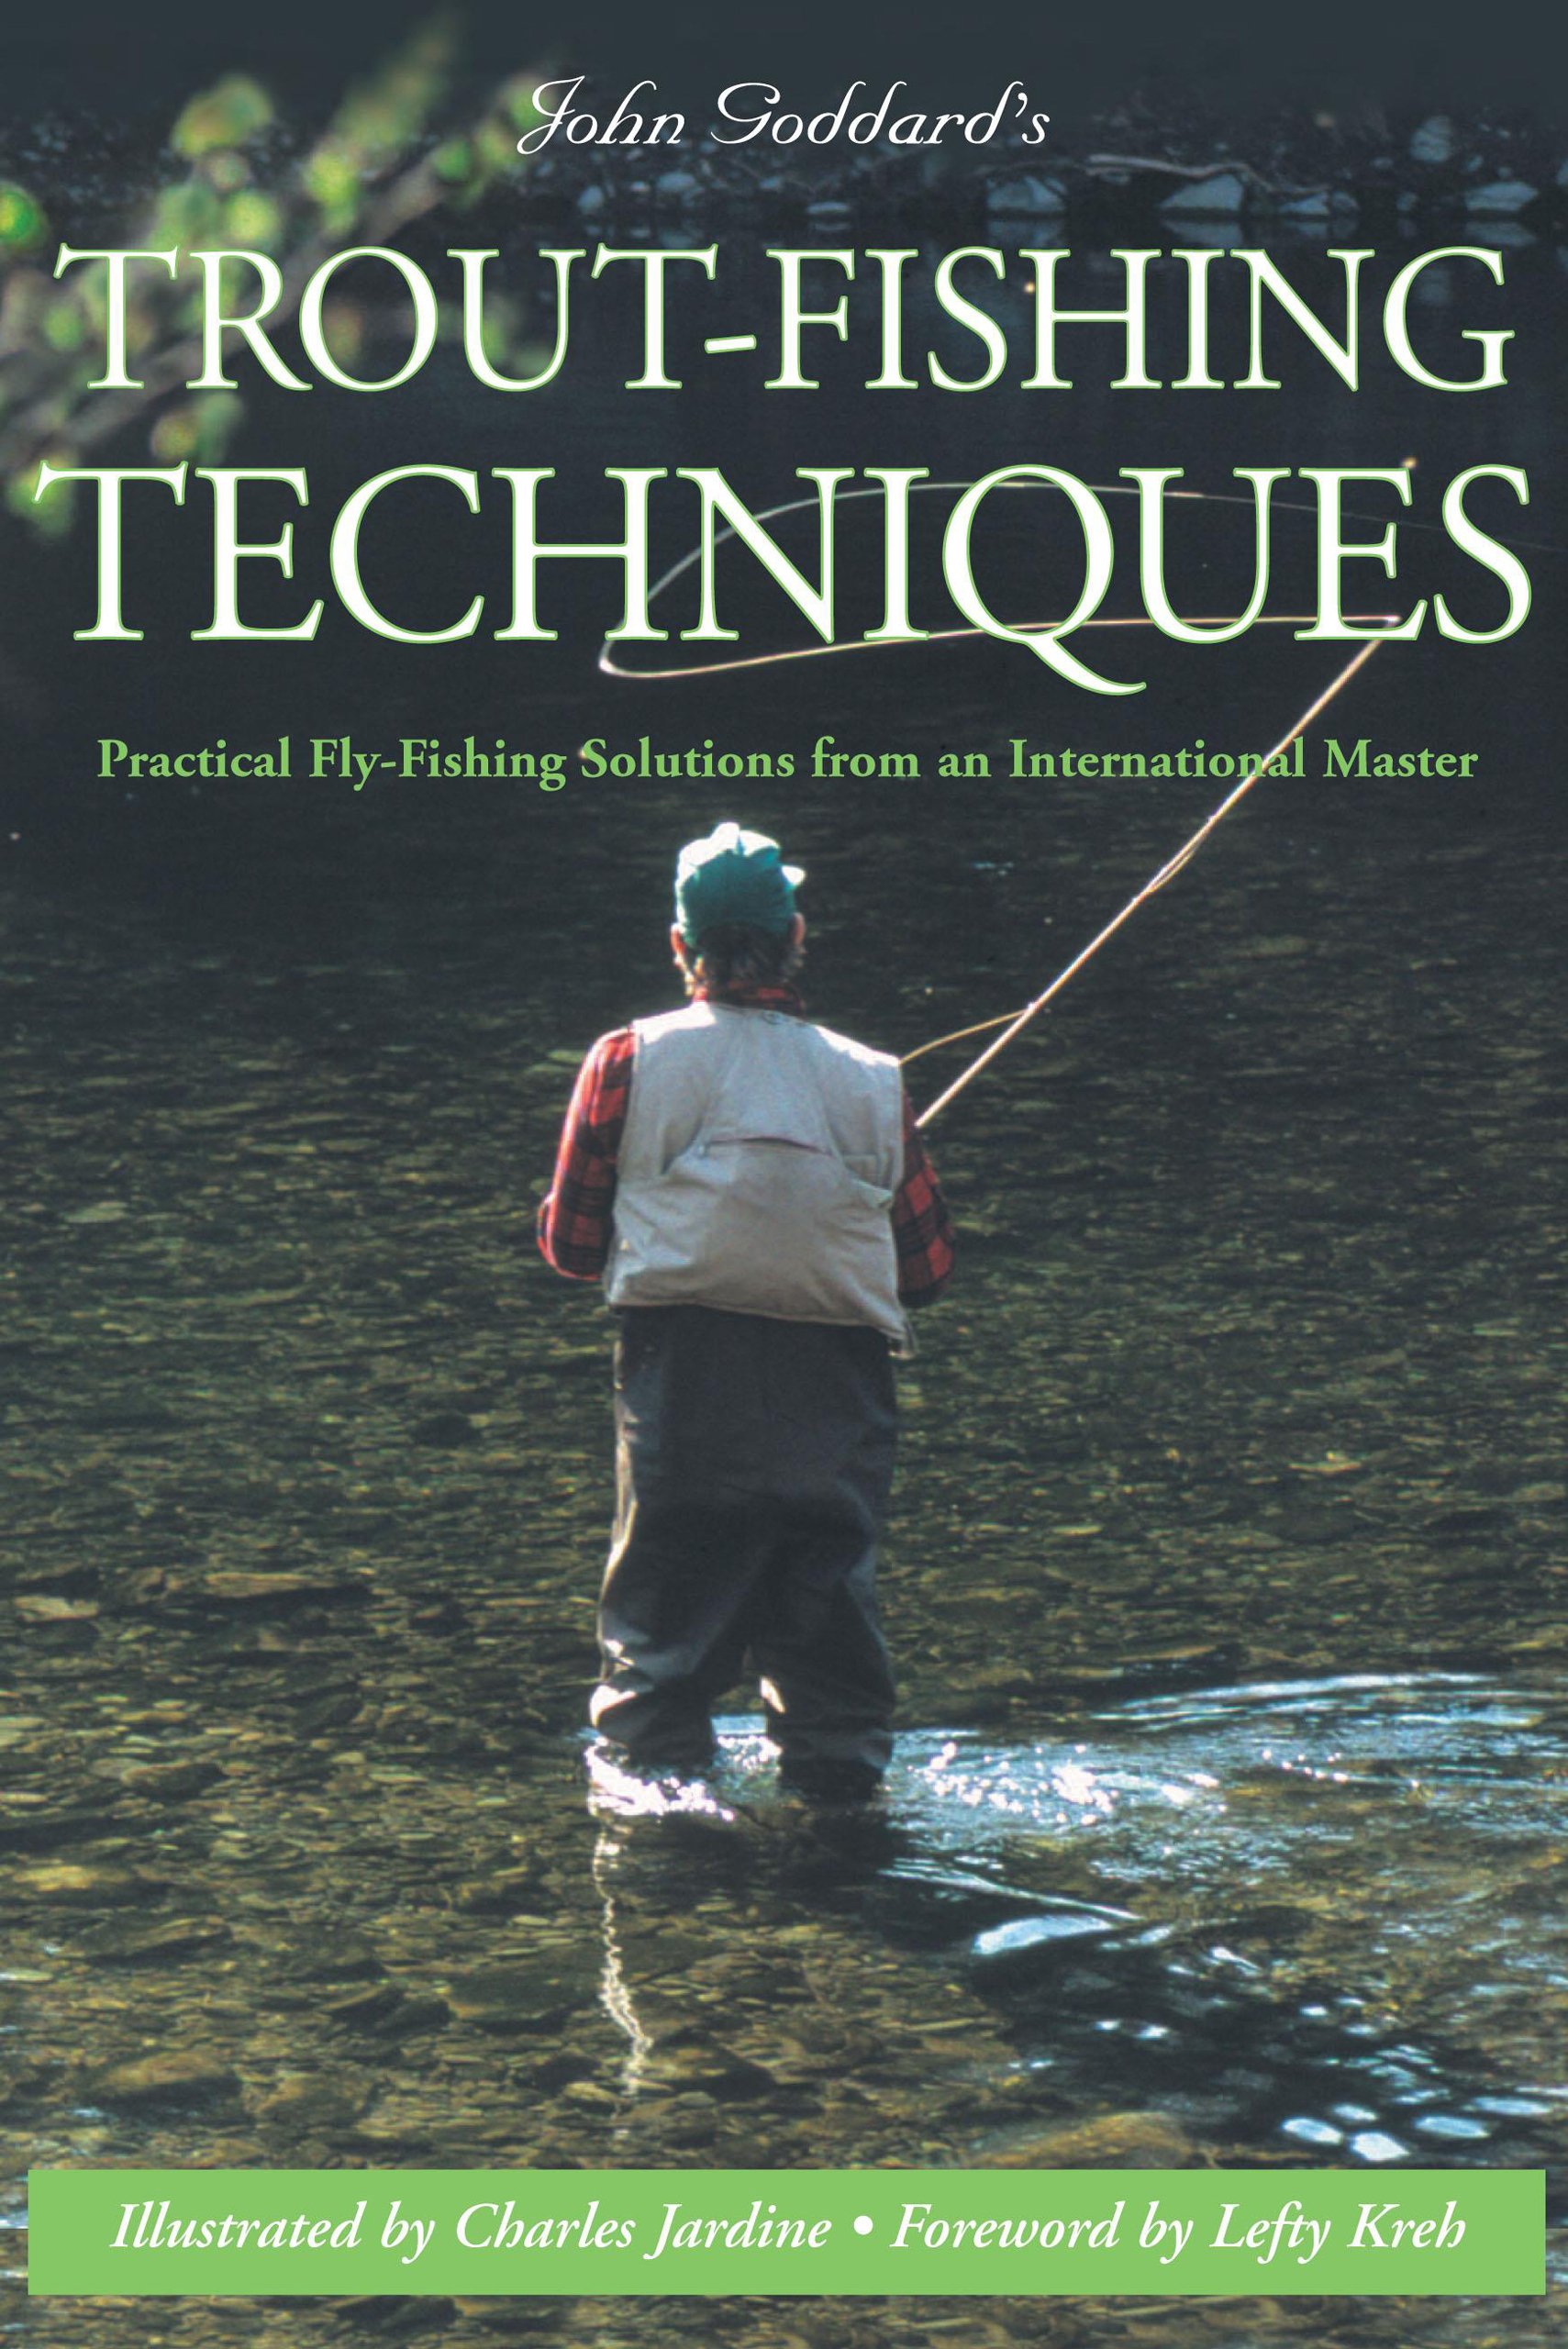 https://www.askaboutflyfishing.com/wp-content/uploads/2019/11/John-Goddards-Trout-Fishing-Techniques.jpg